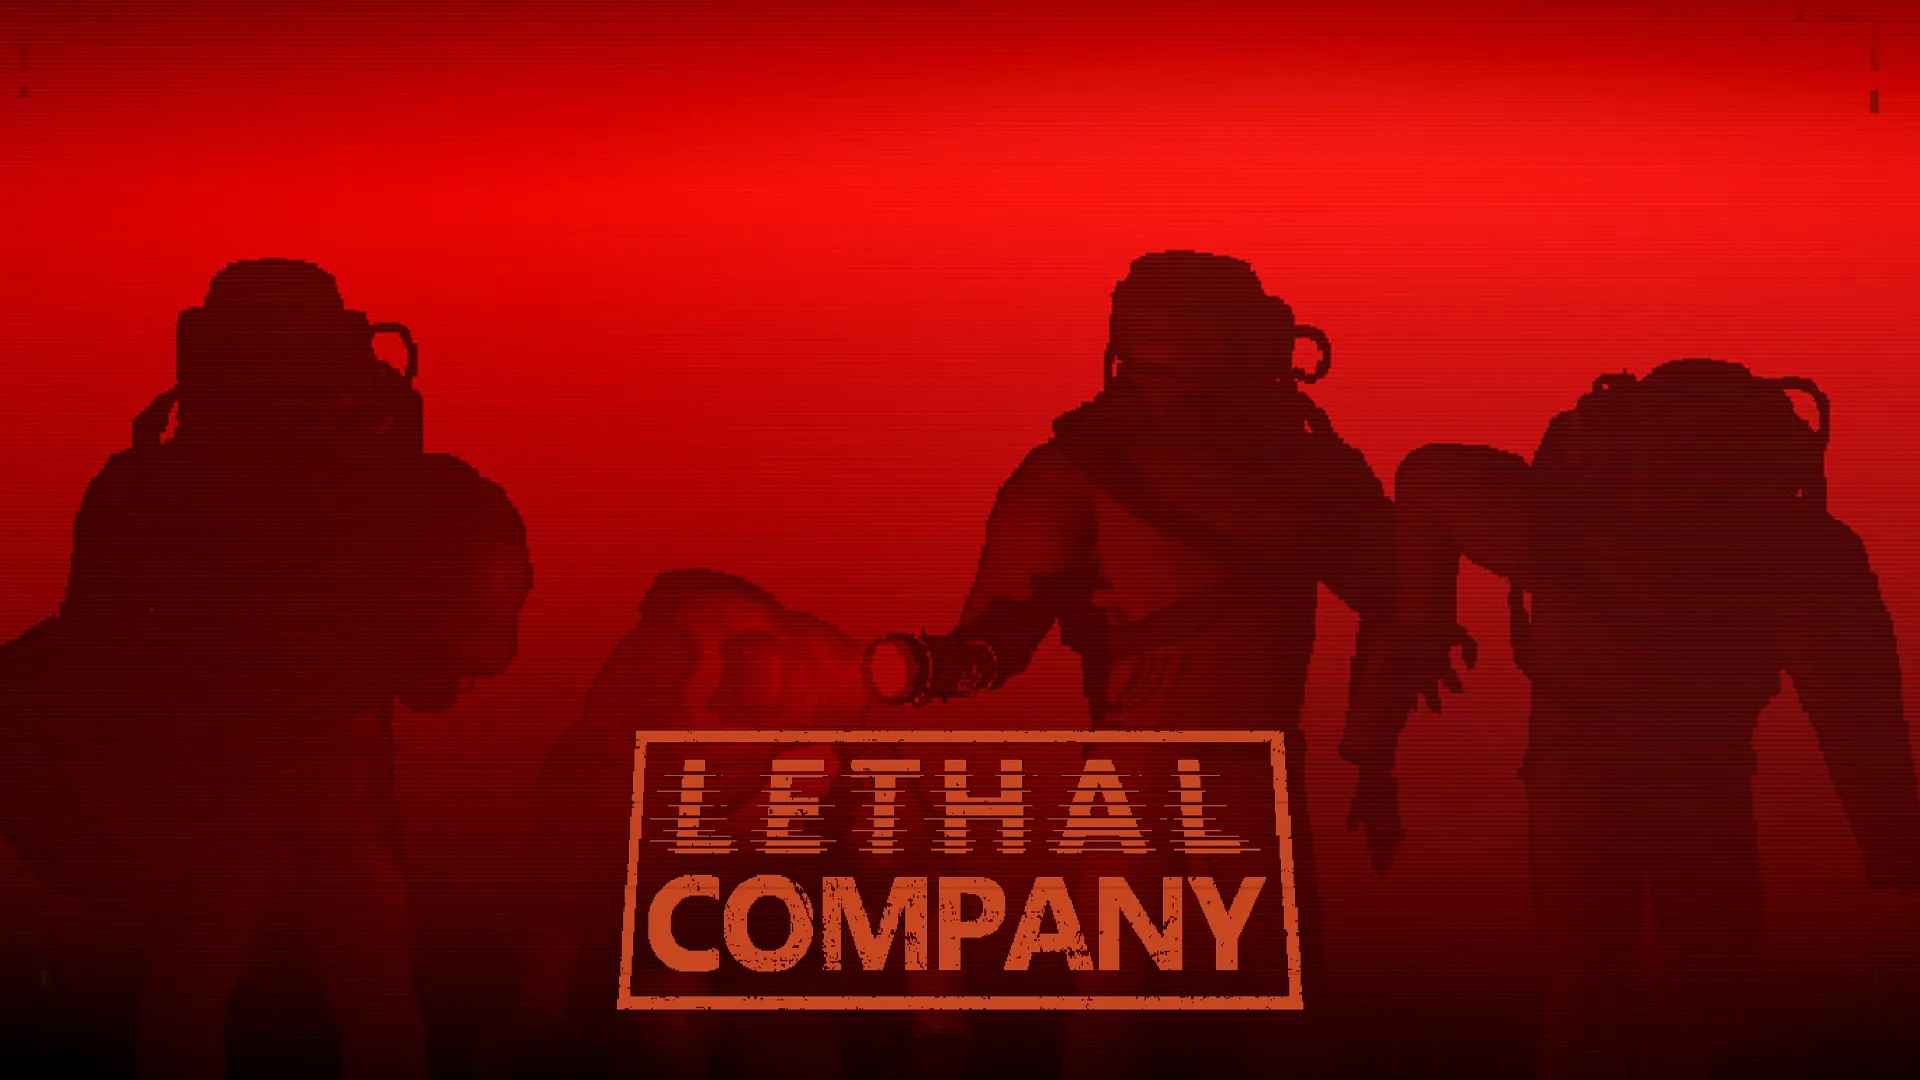 Lethal Company Hero